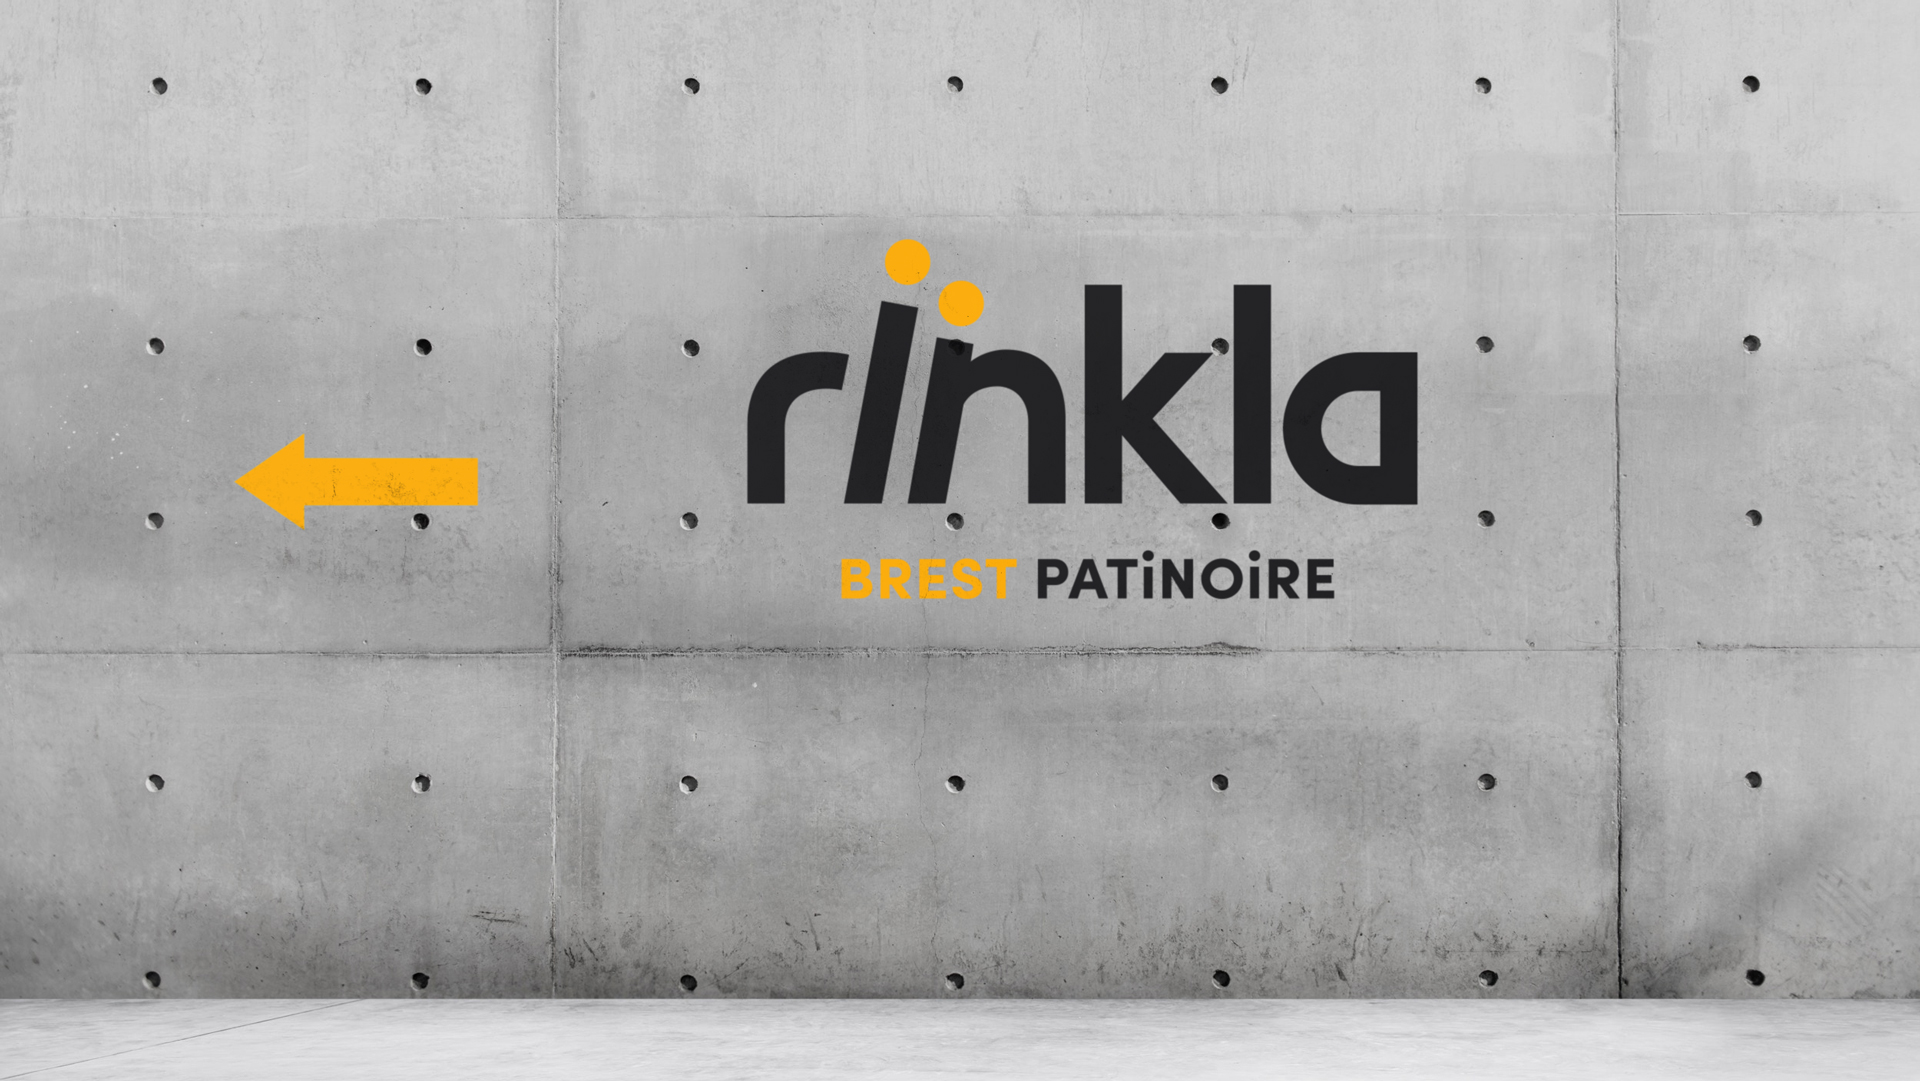 rinkla patinoire brest metropole identite visuelle logo signaletique mur